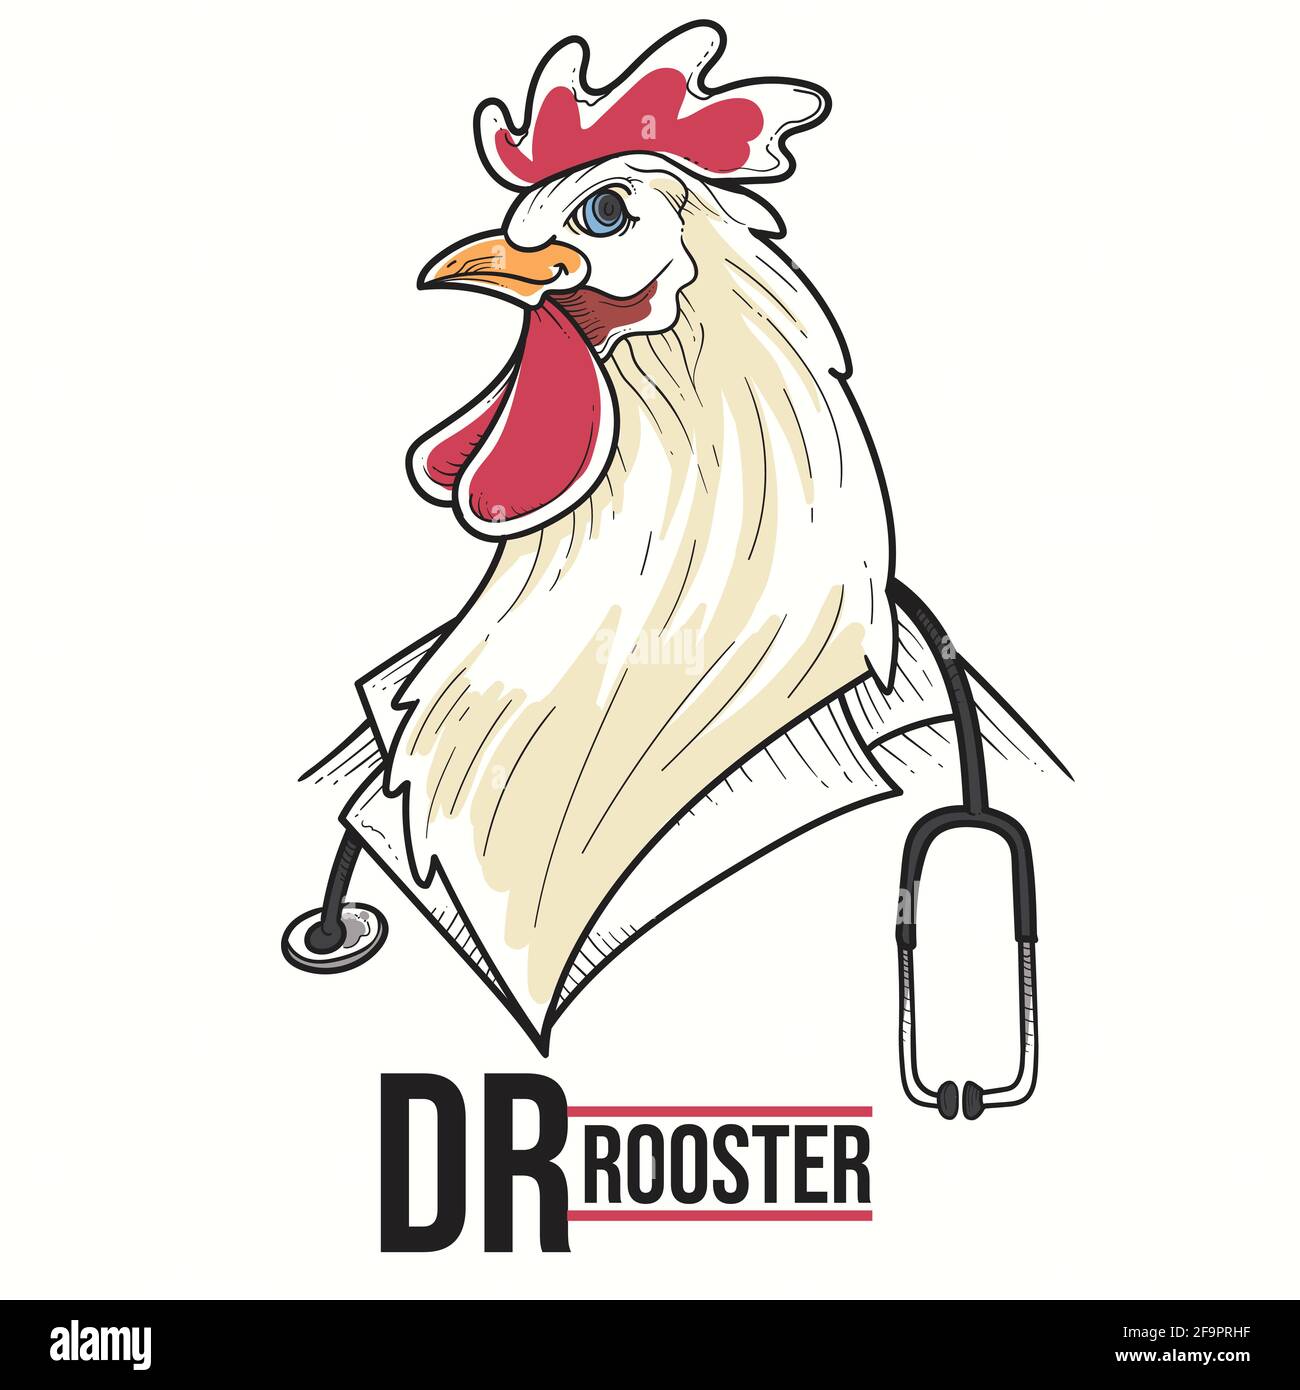 Ilustración de dibujos animados dibujada a mano de un gallo / pollo como un  doctor Imagen Vector de stock - Alamy